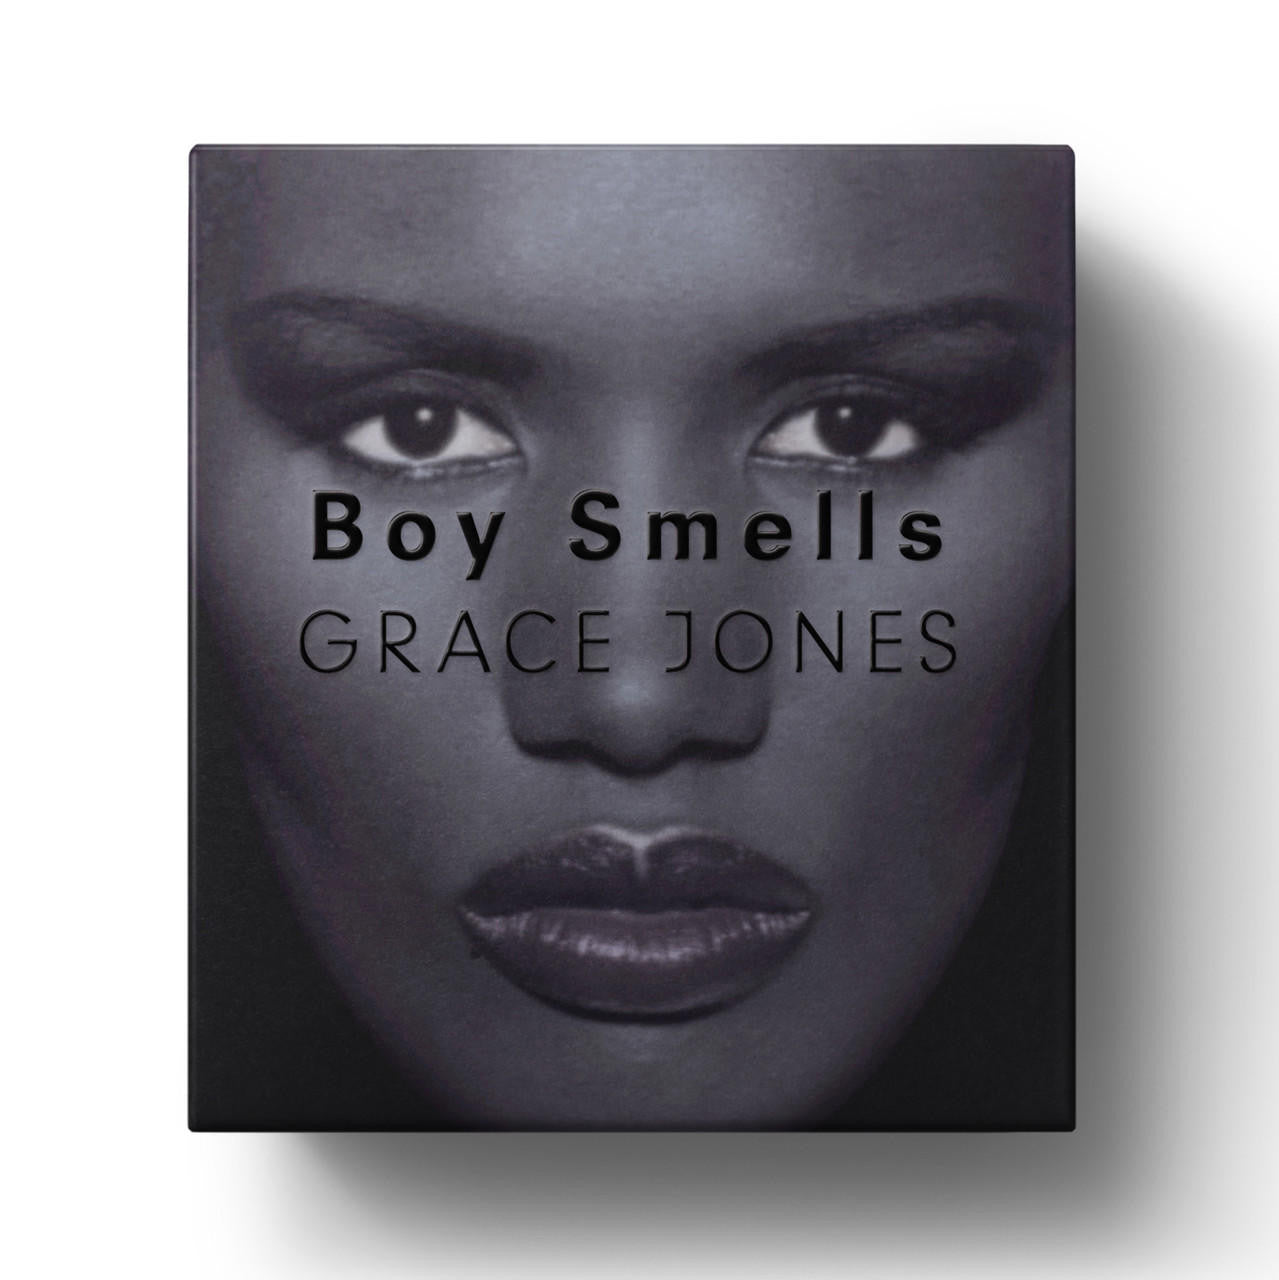  Boy Smells GRACE JONES Candle 